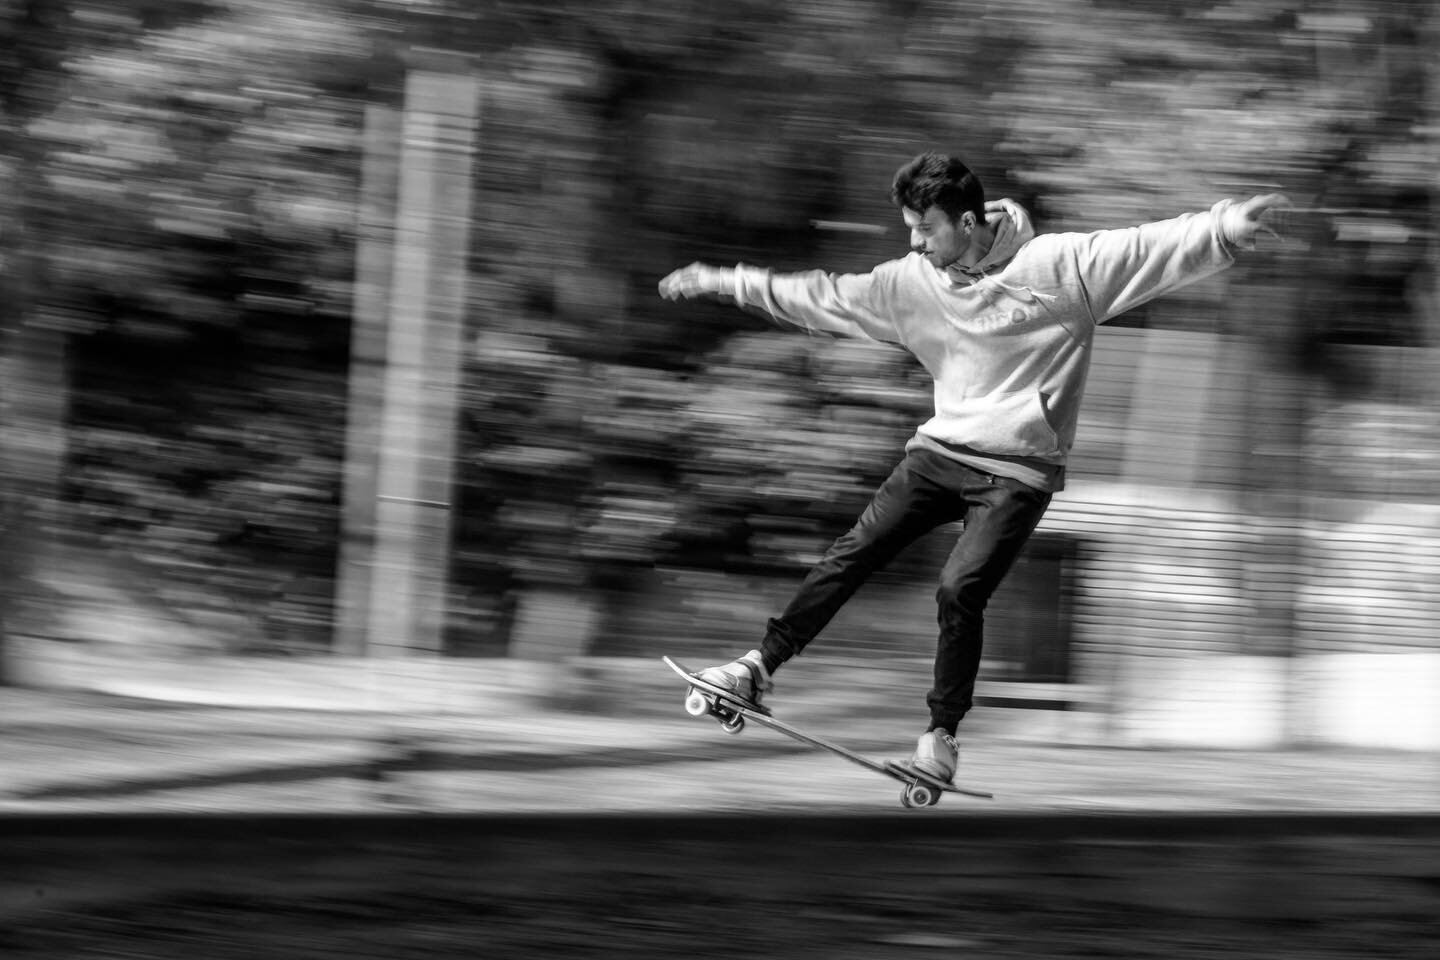 @jordiscofield in AdrenaLINE
Set to premiere April 10th 11am PST on YouTube (link in bio)
A @jinxofilms x @dimensionboards production 
.
.
.
.
.

#skatelife #skate #skatestyle #skatelifestyle #street #streetboard #streetboarding #snakeboard #snakeboa